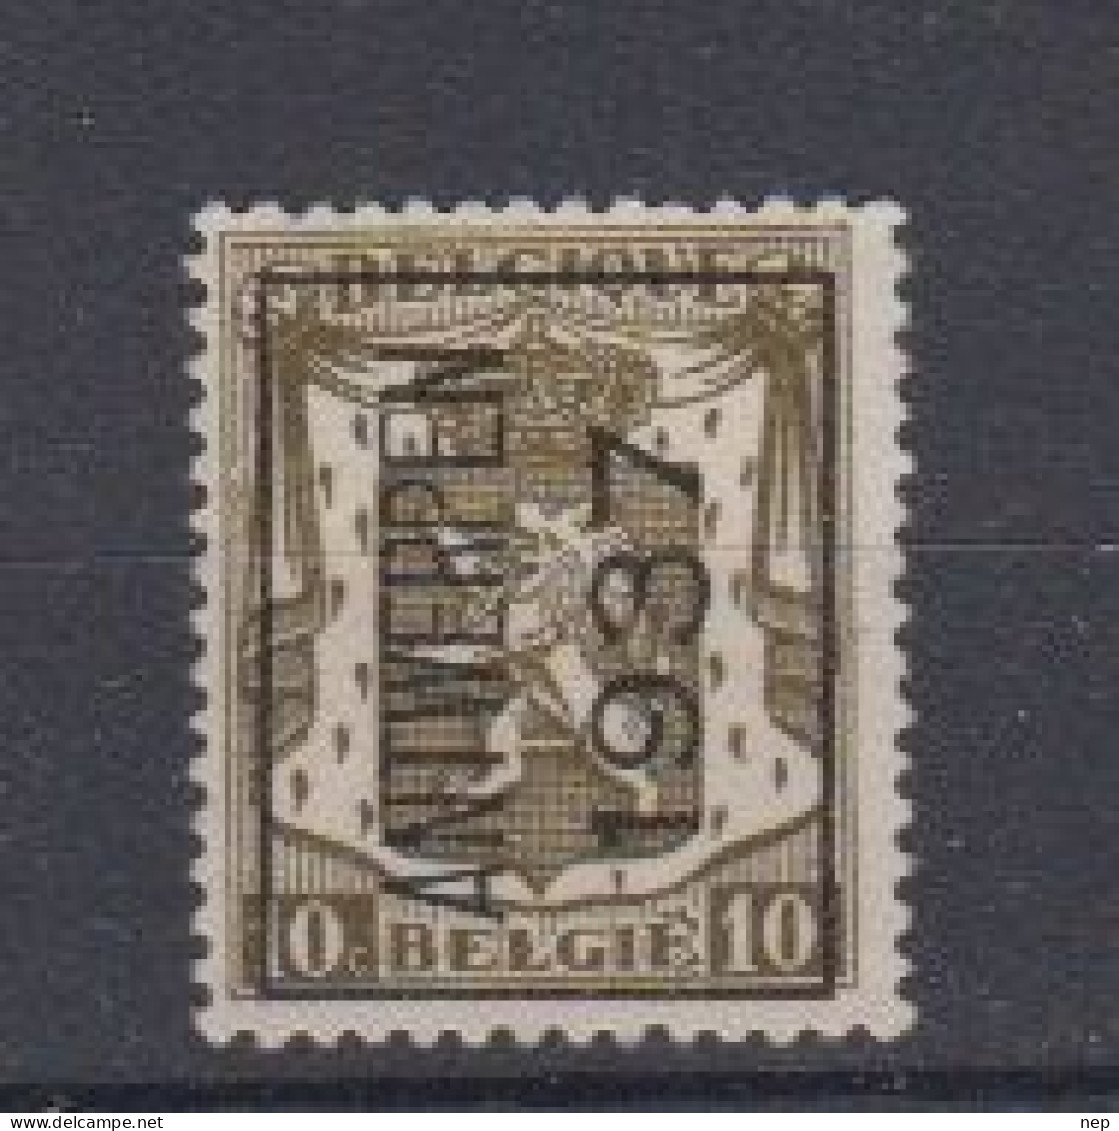 BELGIË - PREO - 1937 - Nr 327 A - ANTWERPEN 1937 - (*) - Tipo 1936-51 (Sigillo Piccolo)